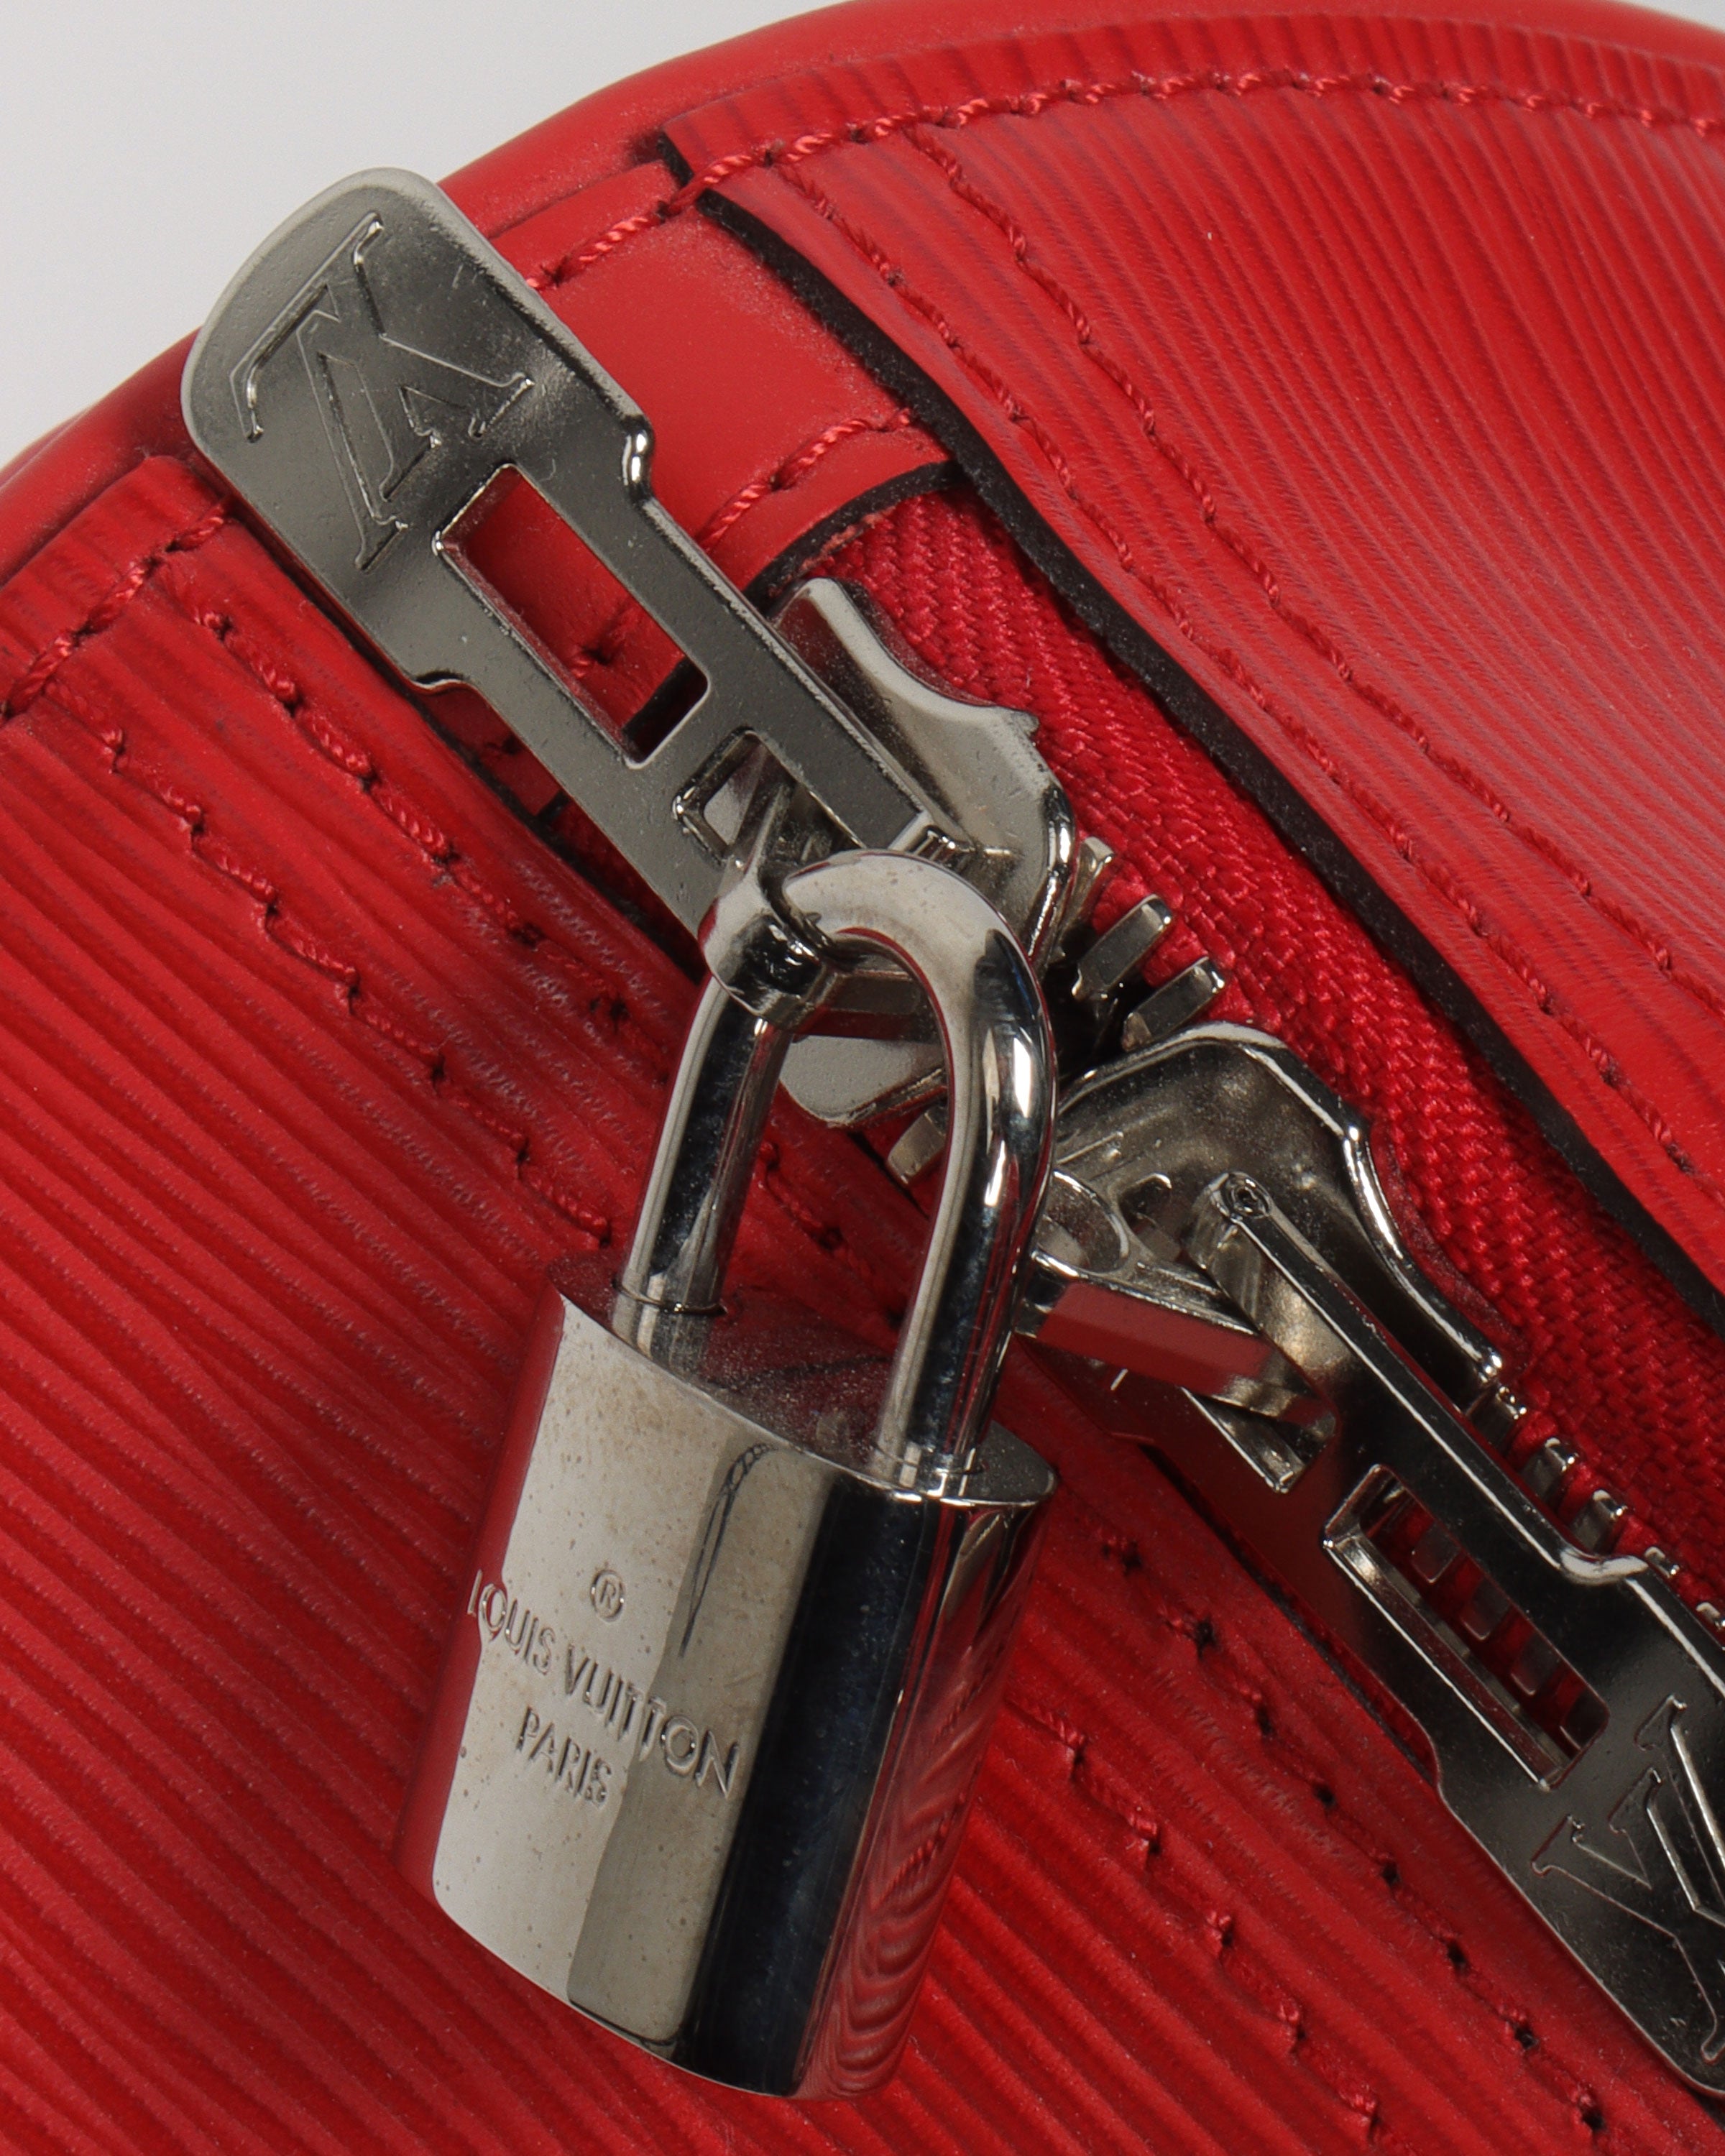 Louis Vuitton Supreme Keepall Bandouliere 45 Travel Bag